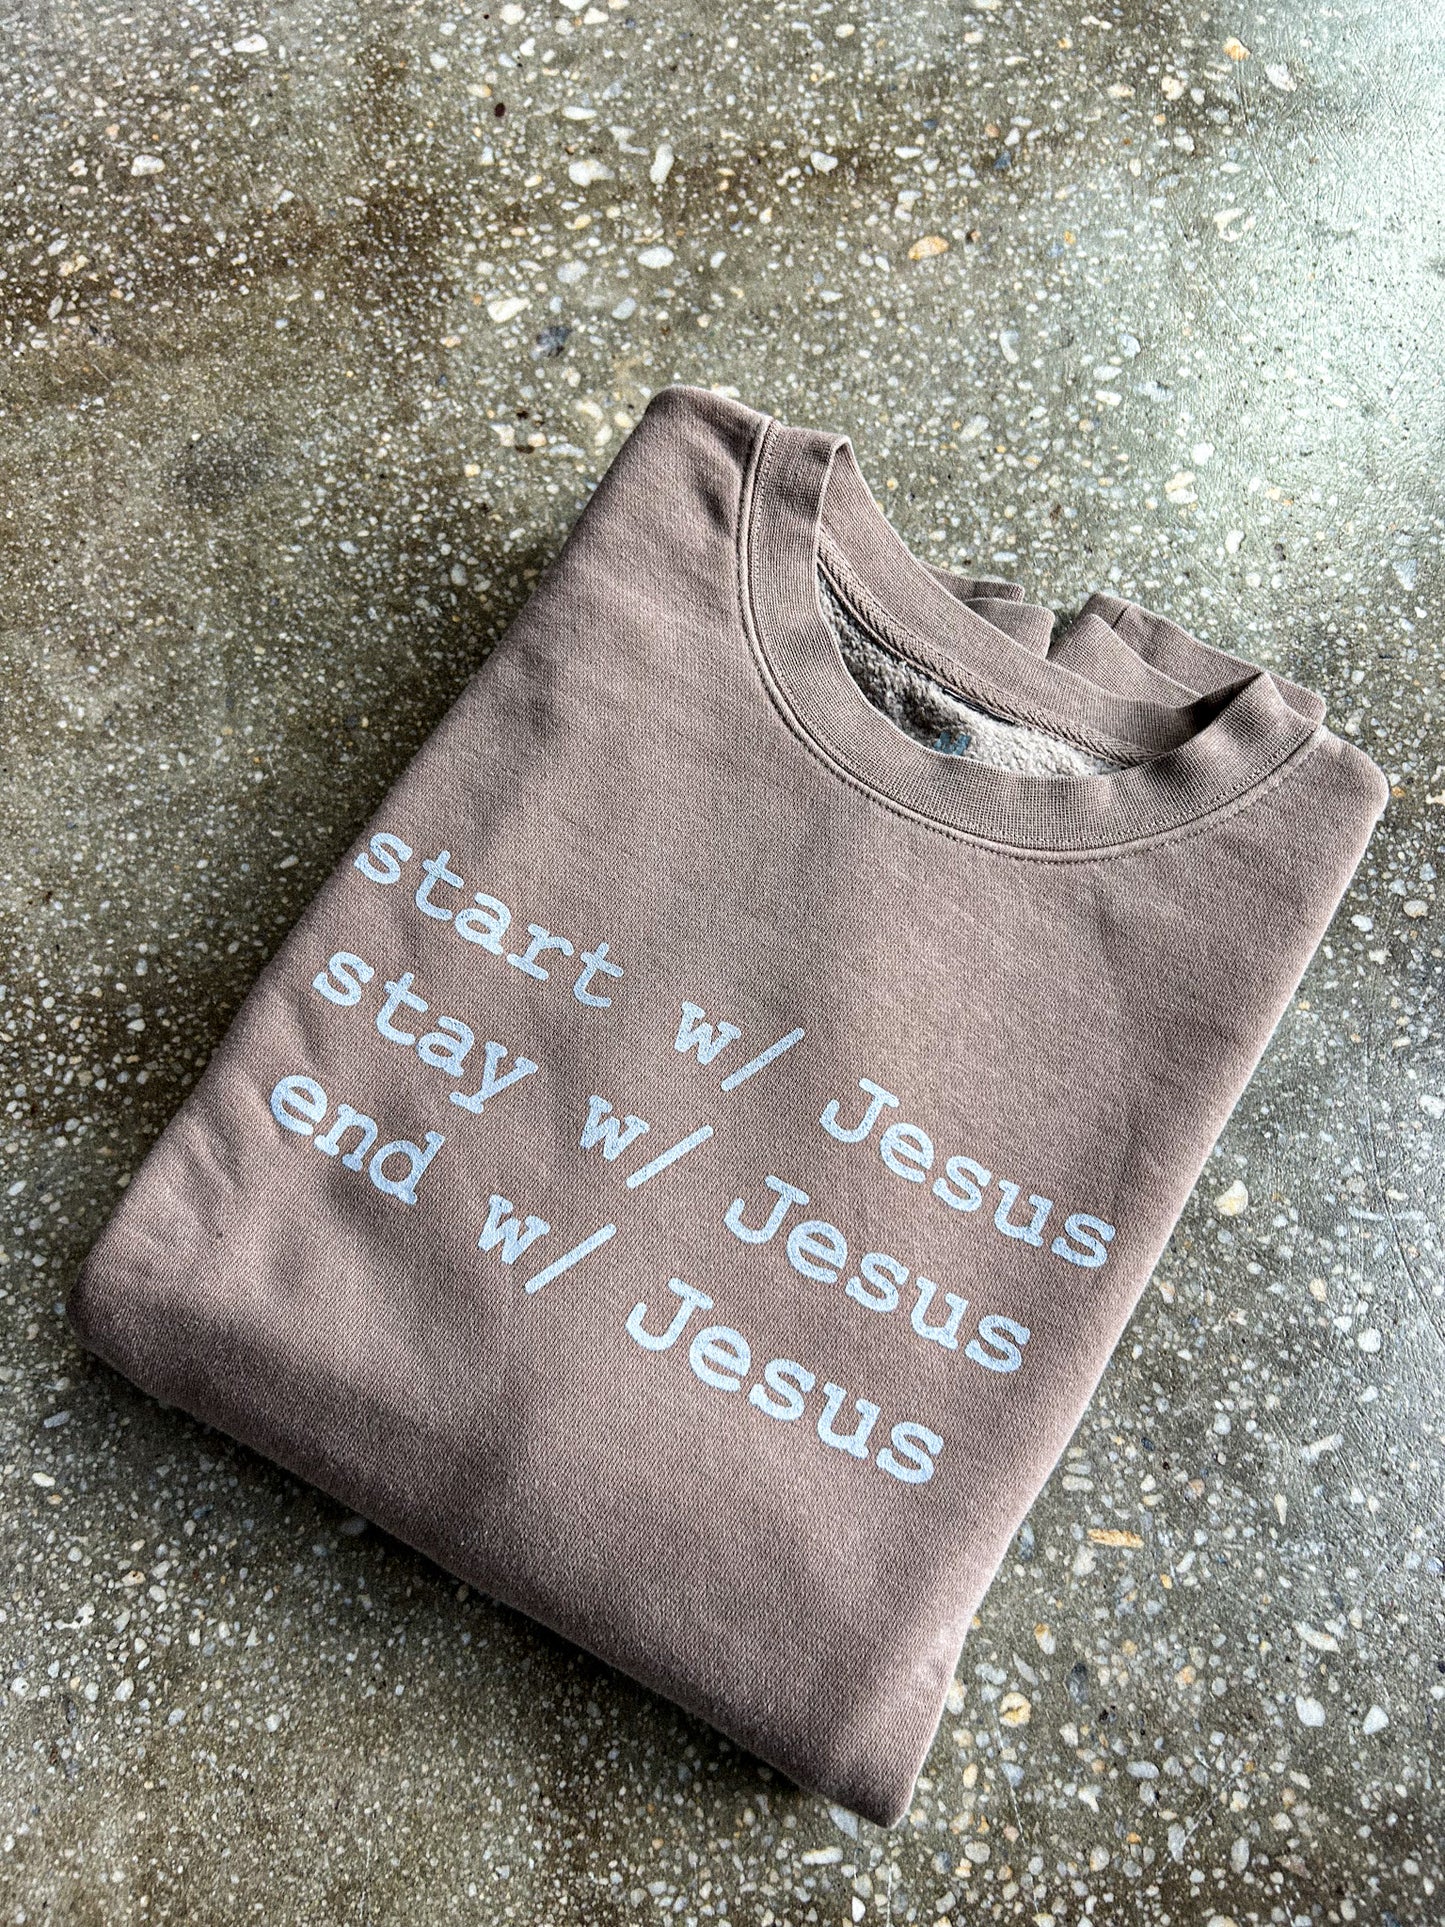 Start, Stay, End with Jesus Adult Drop Shoulder Sweatshirt